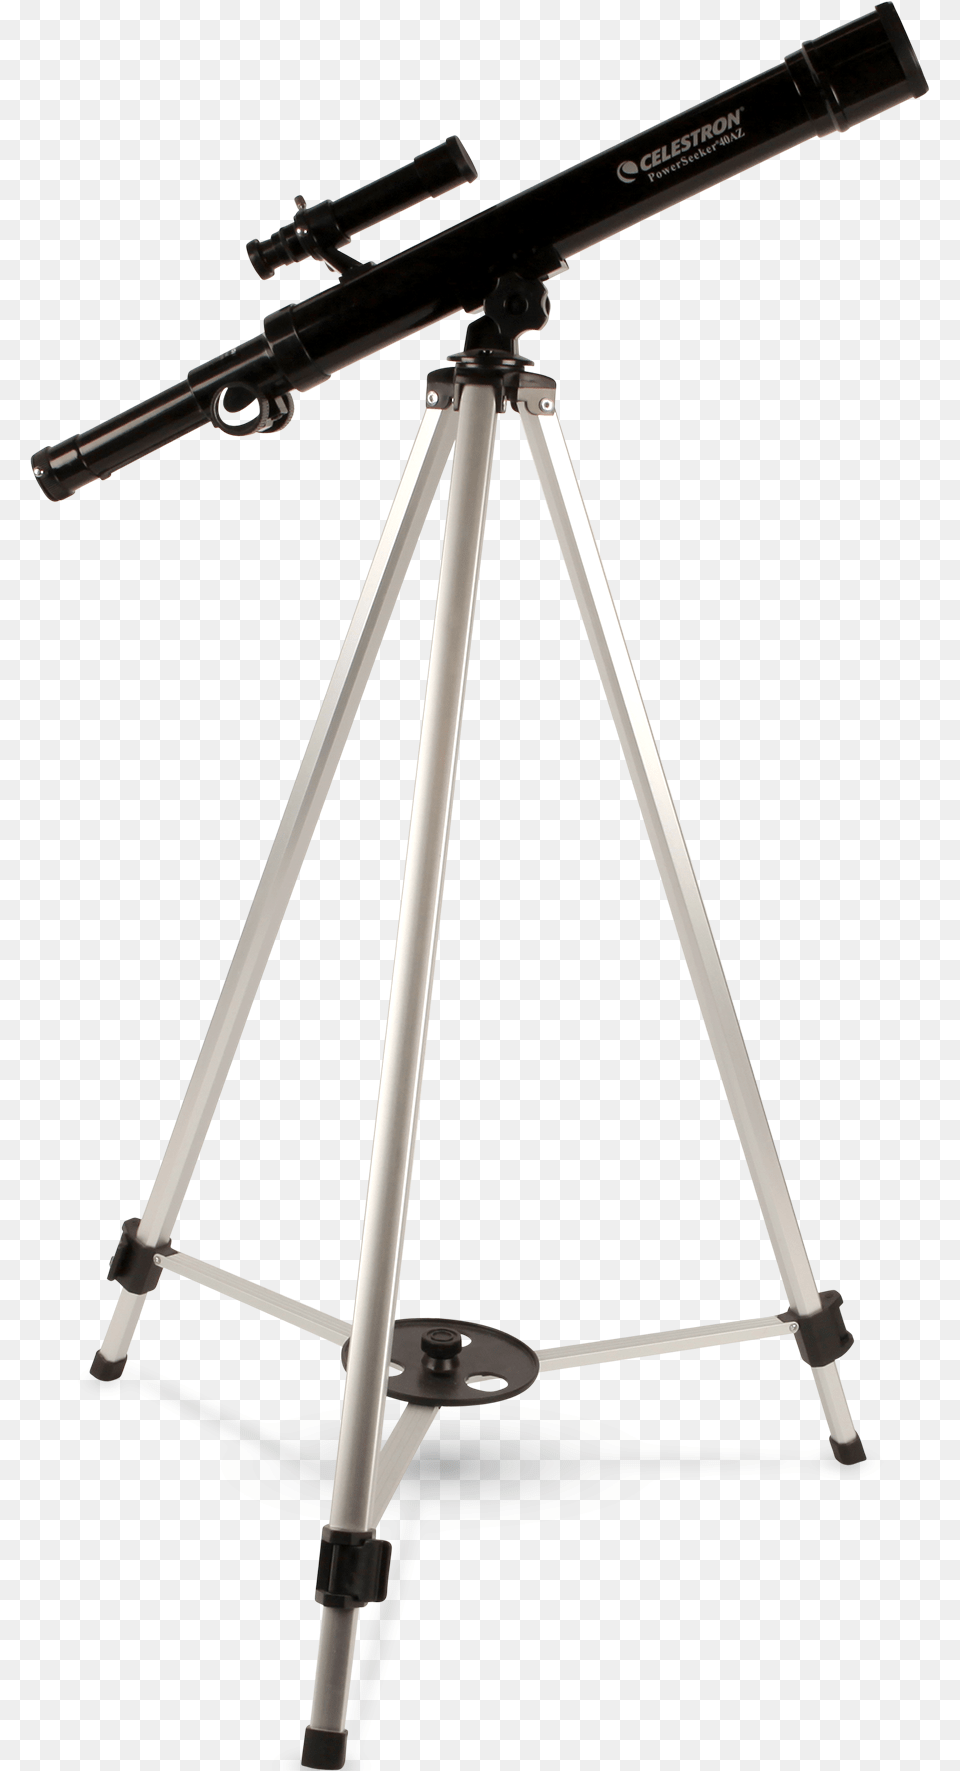 Celestron Powerseeker 40mm Telescope Unboxed Telescope On Stand, Gun, Weapon, E-scooter, Transportation Free Png